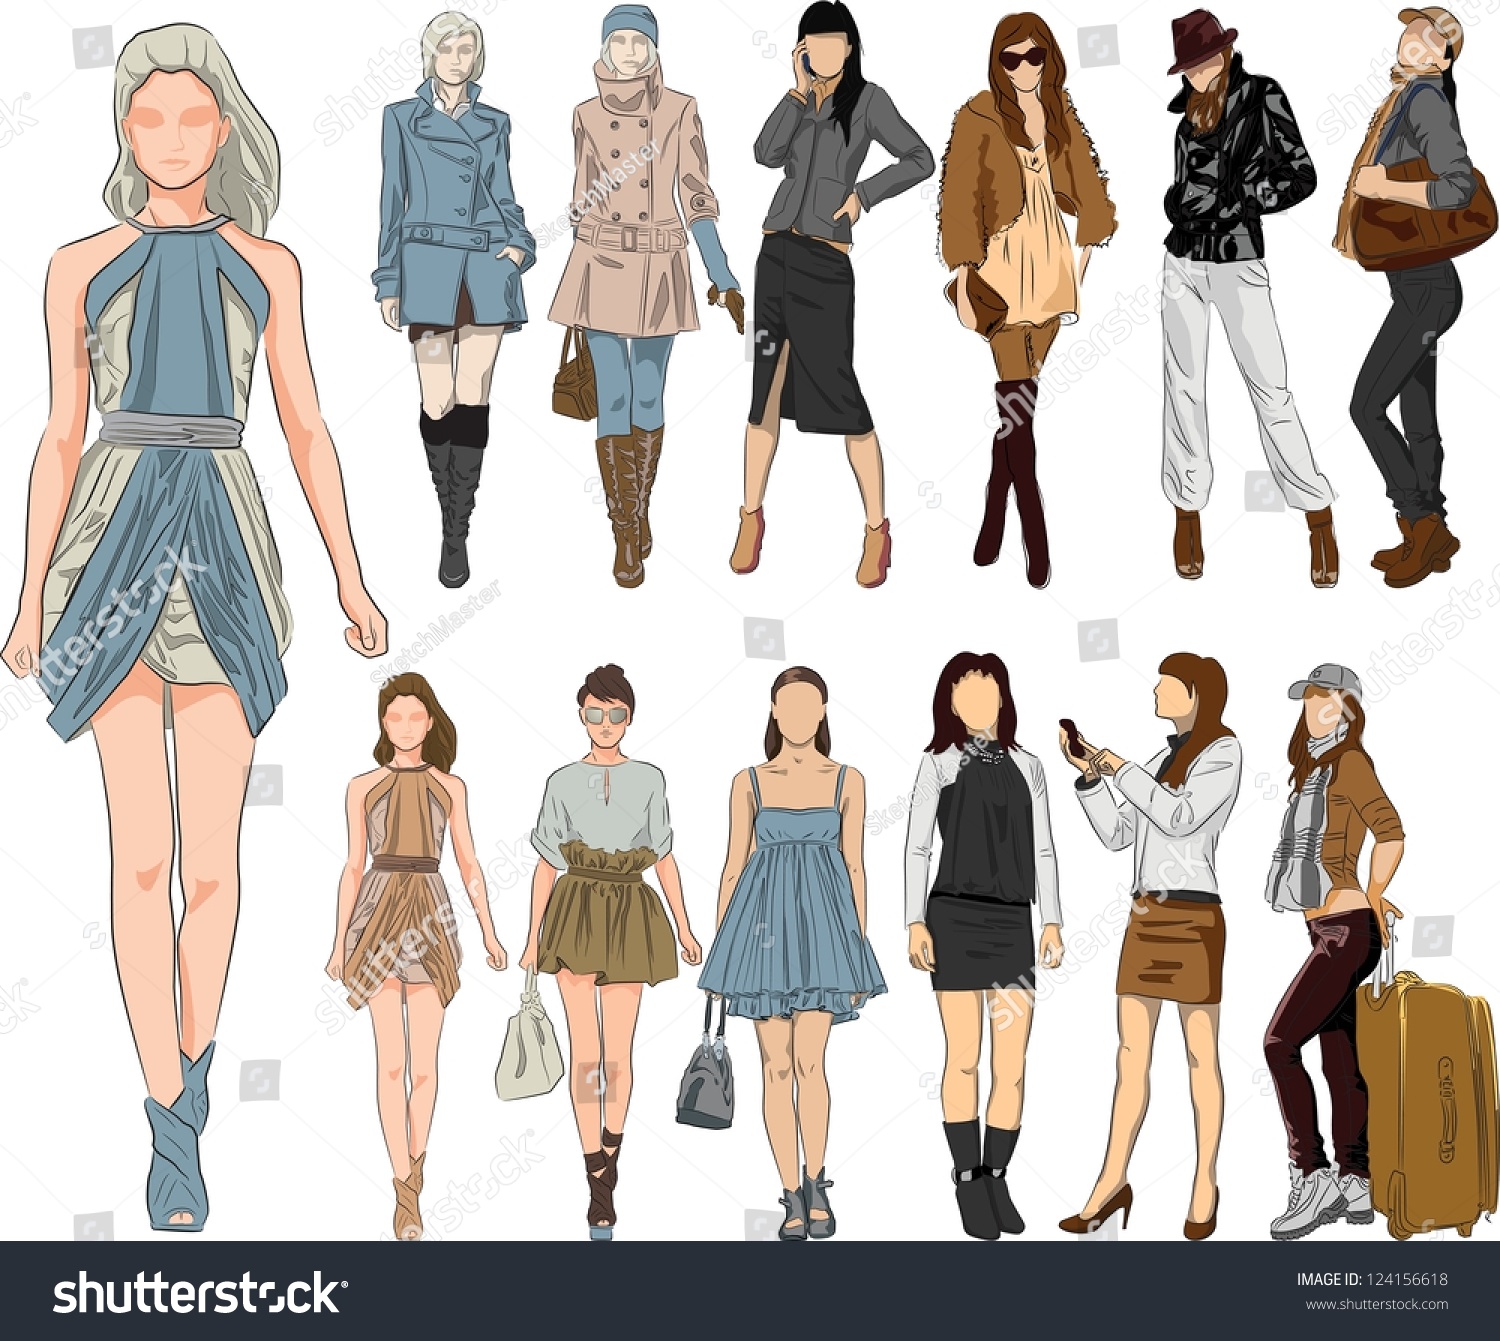 Vector Sketch Fashion Women - 124156618 : Shutterstock